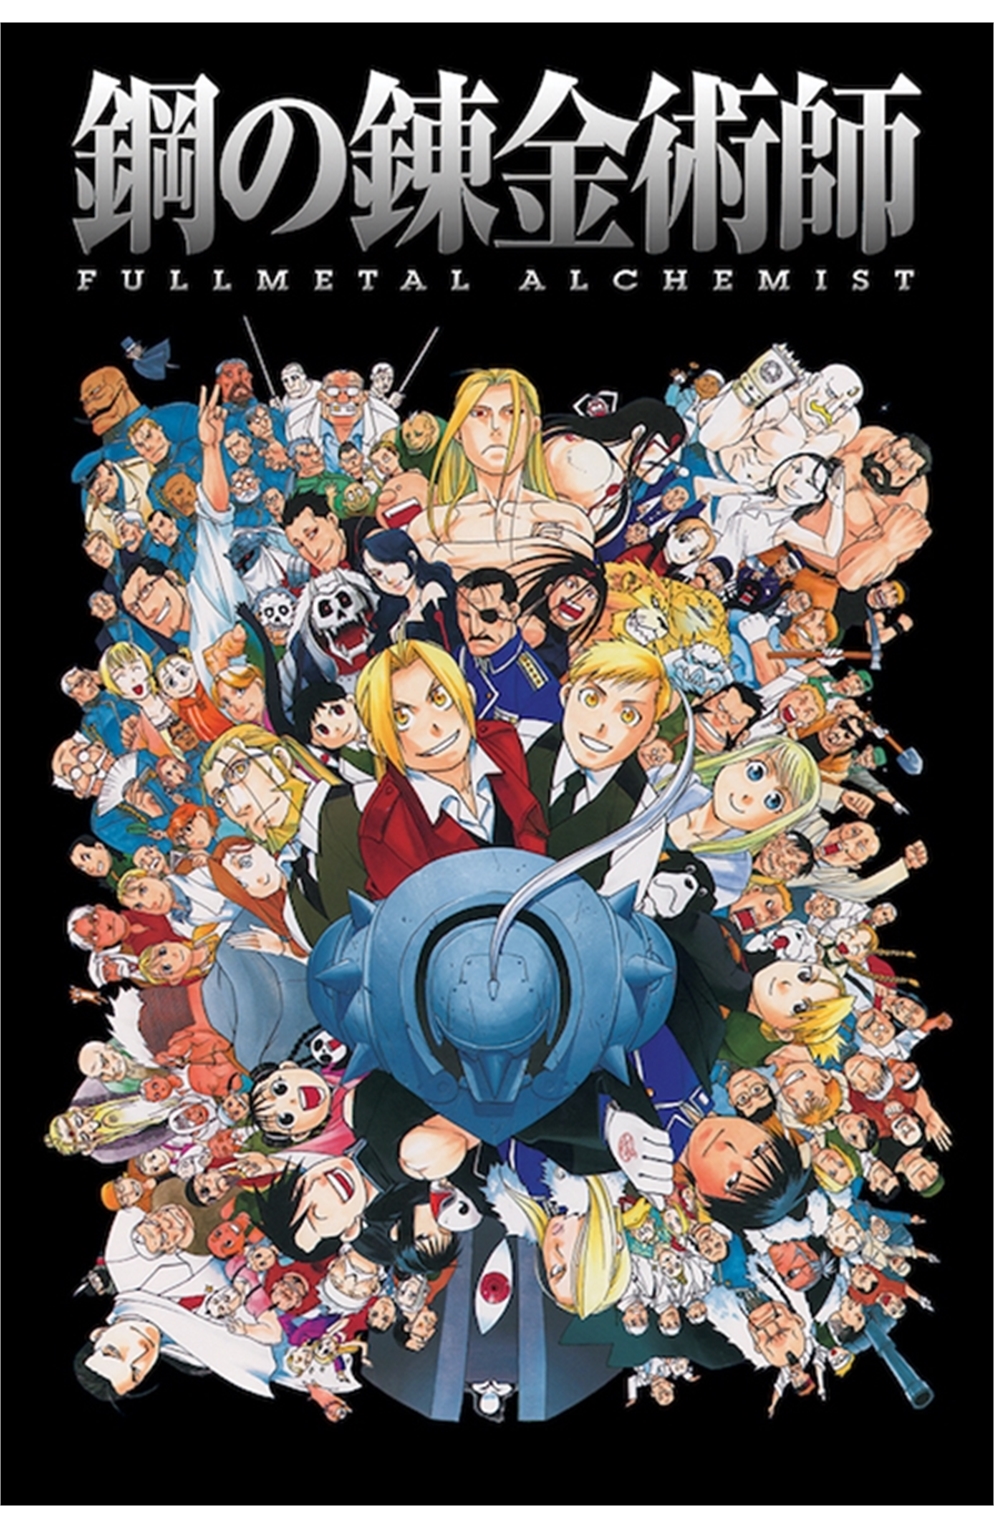 Fullmetal Alchemist Characters Poster